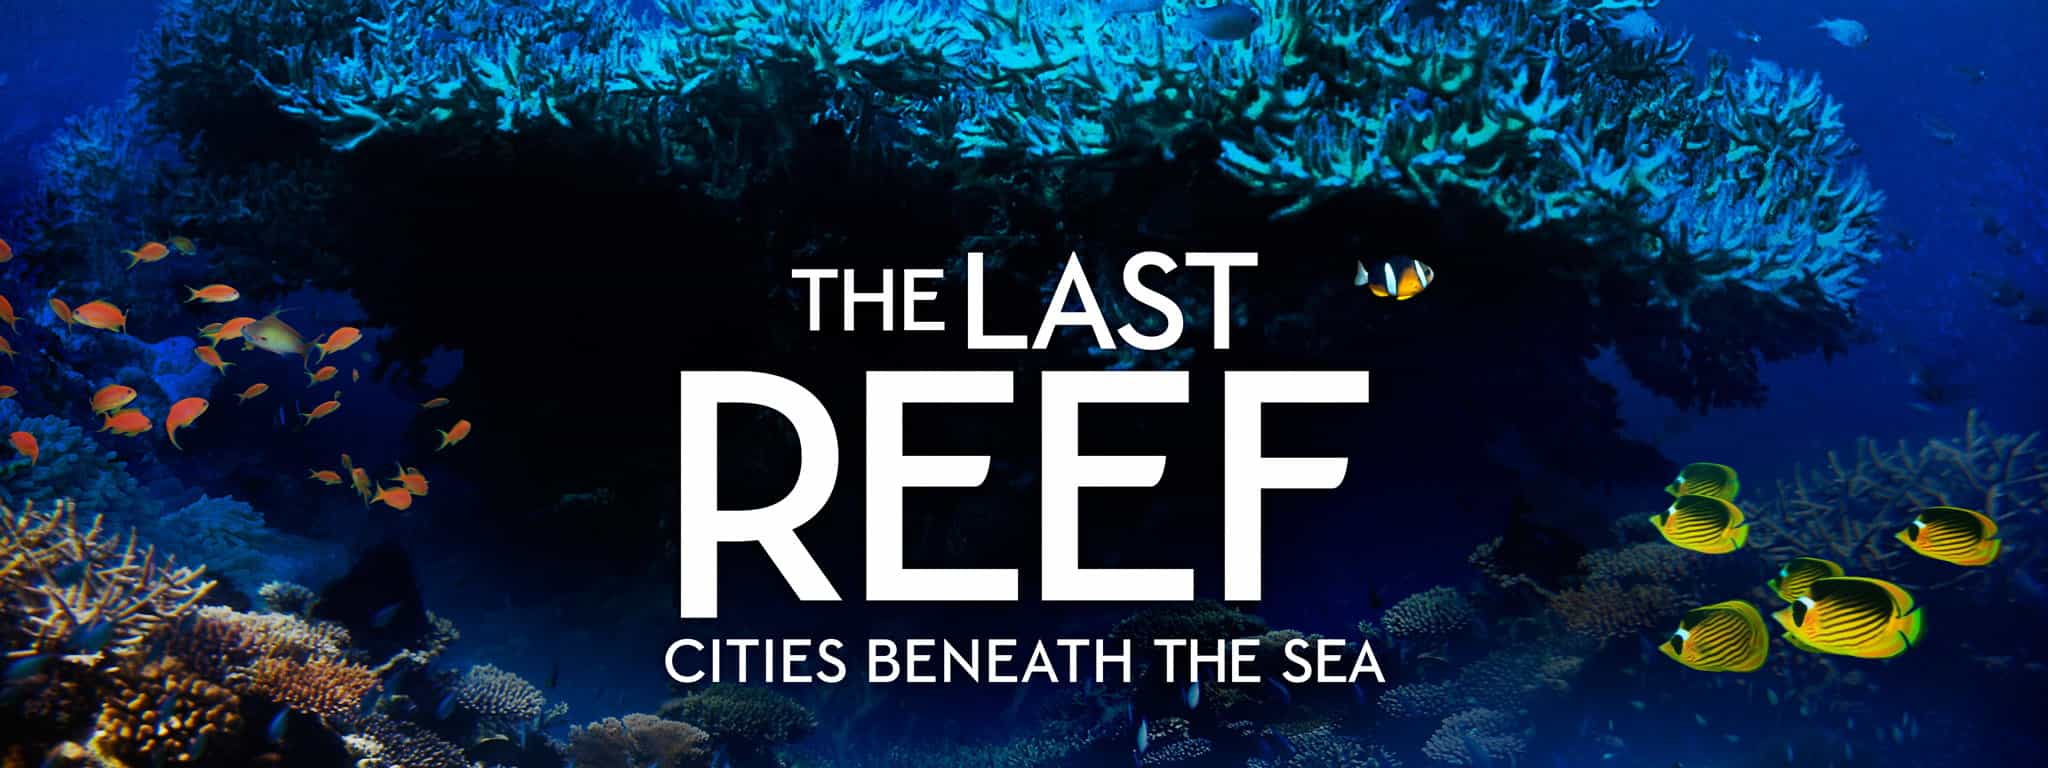 The Last Reef: Cities Beneath the Sea 4K 2012 big poster